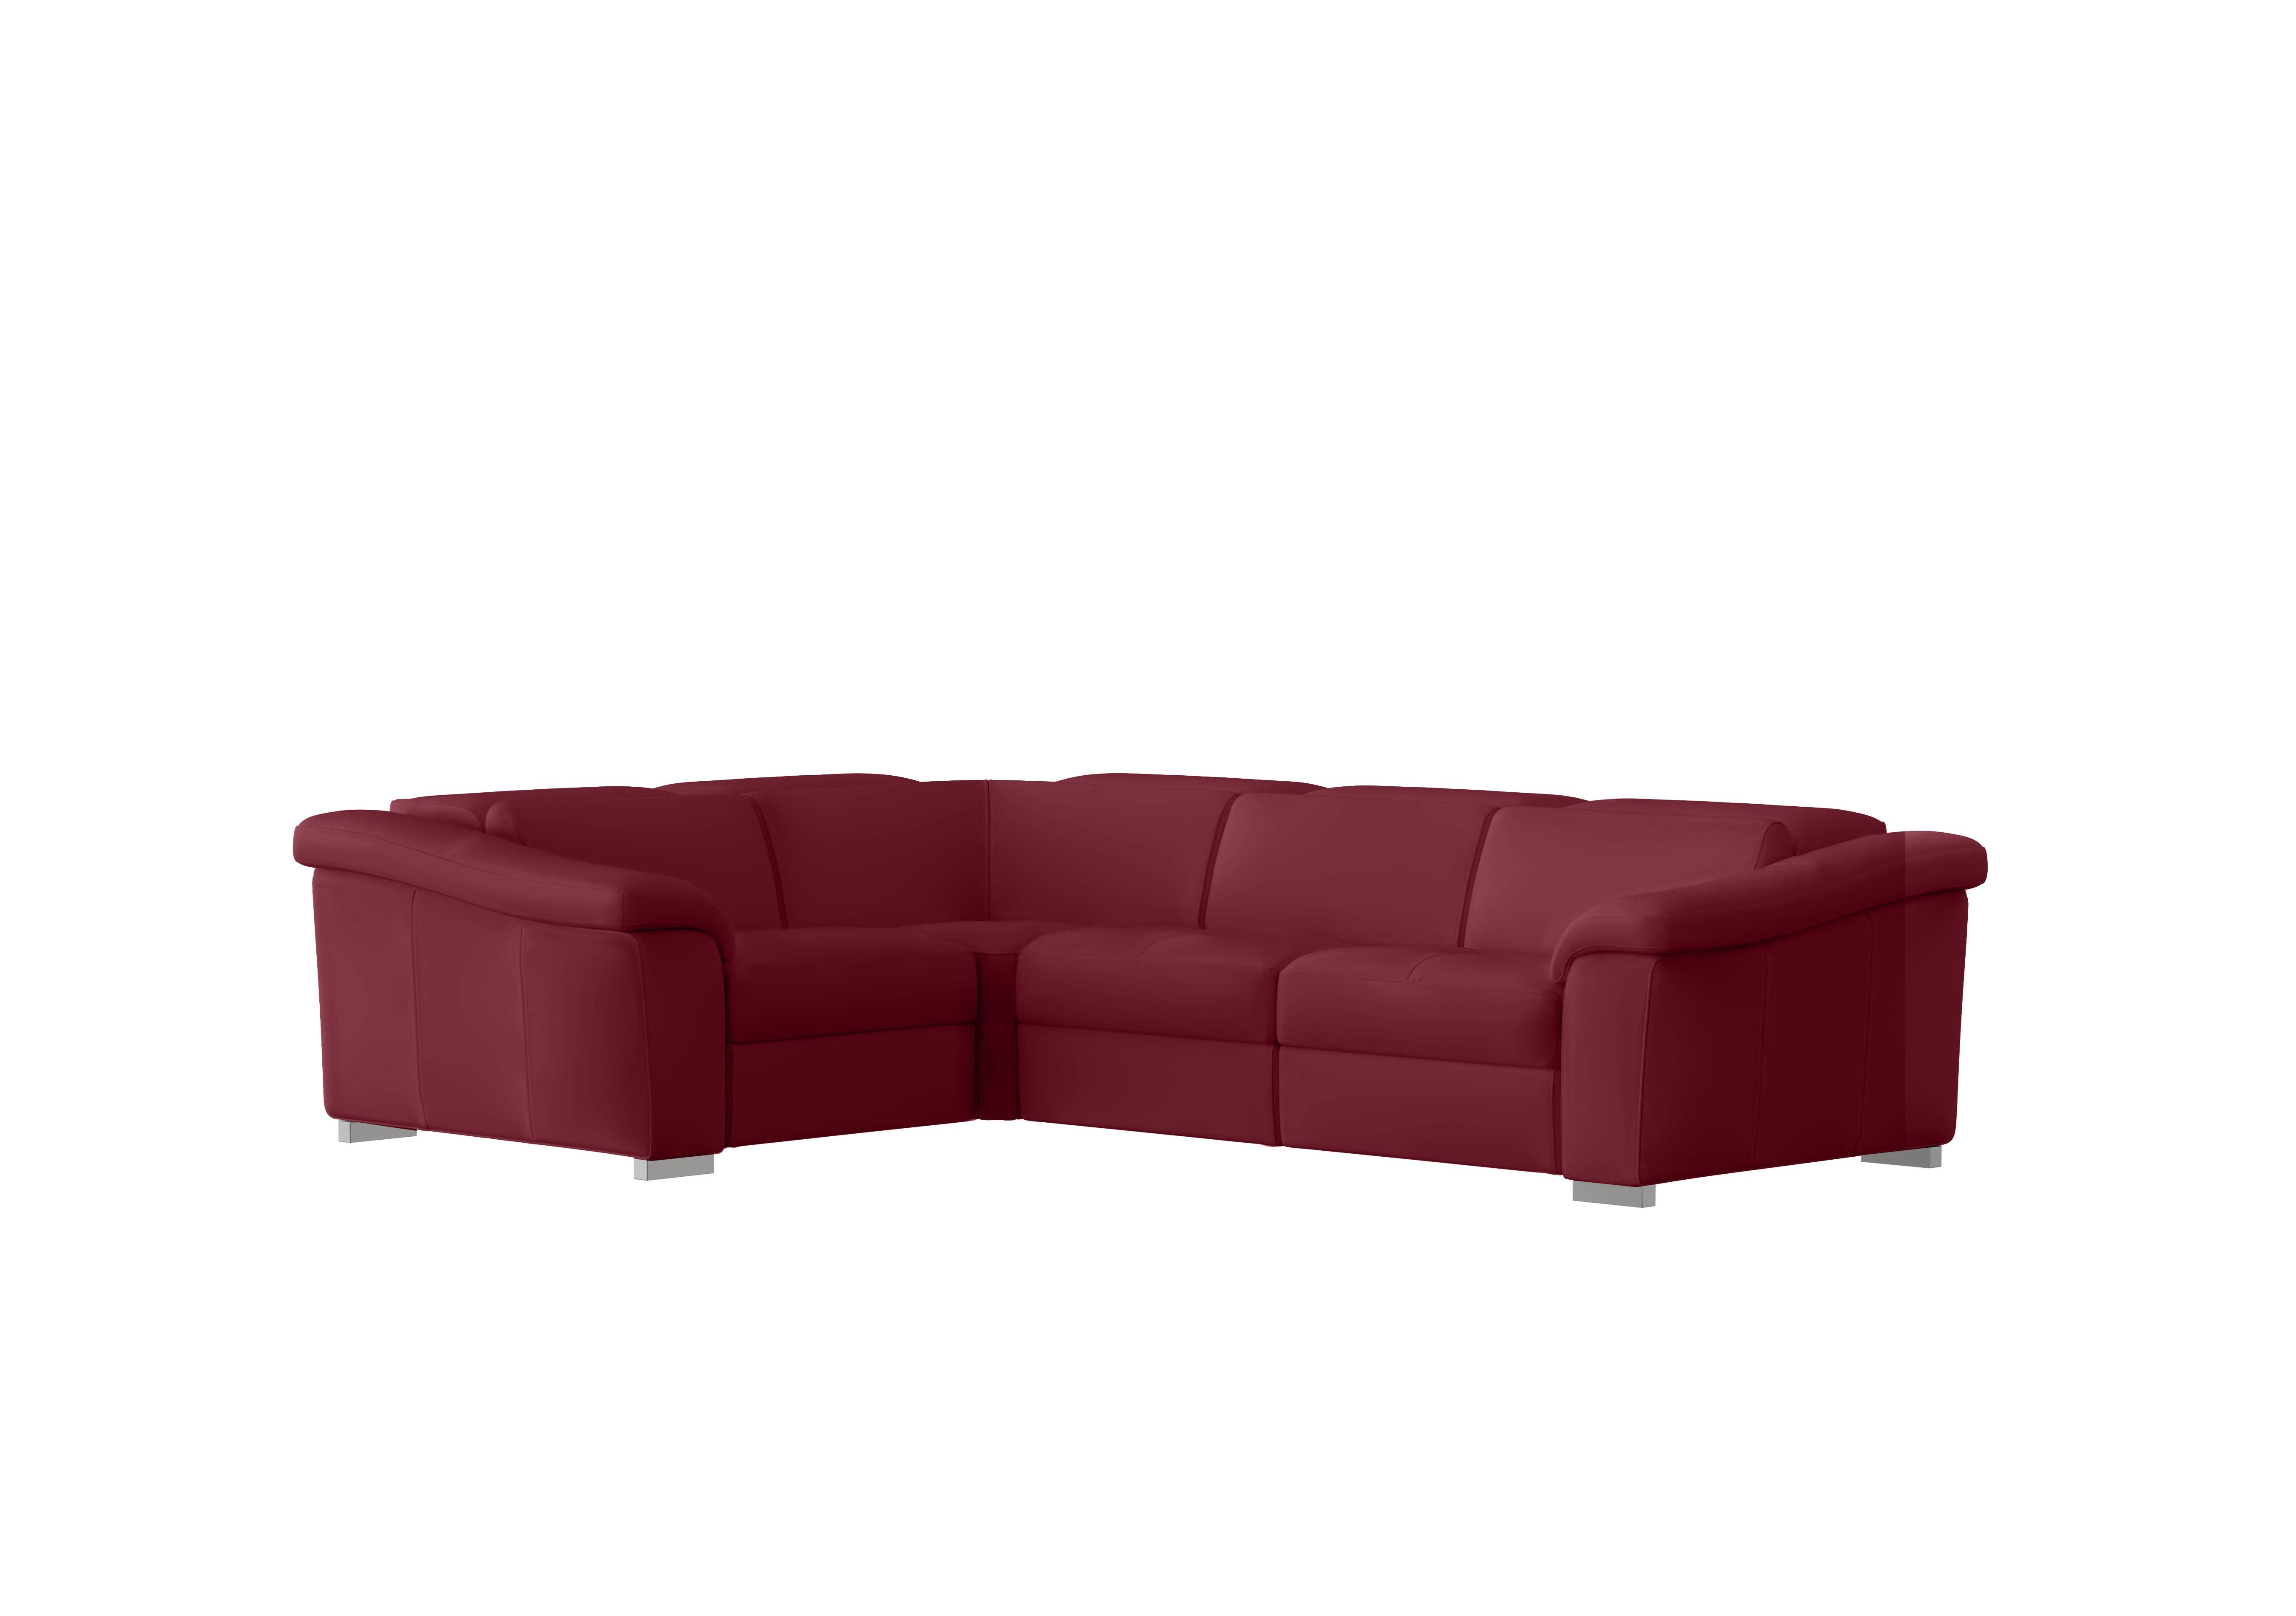 Galileo Leather Corner Sofa in Dali Bordeaux 1521 Ch on Furniture Village